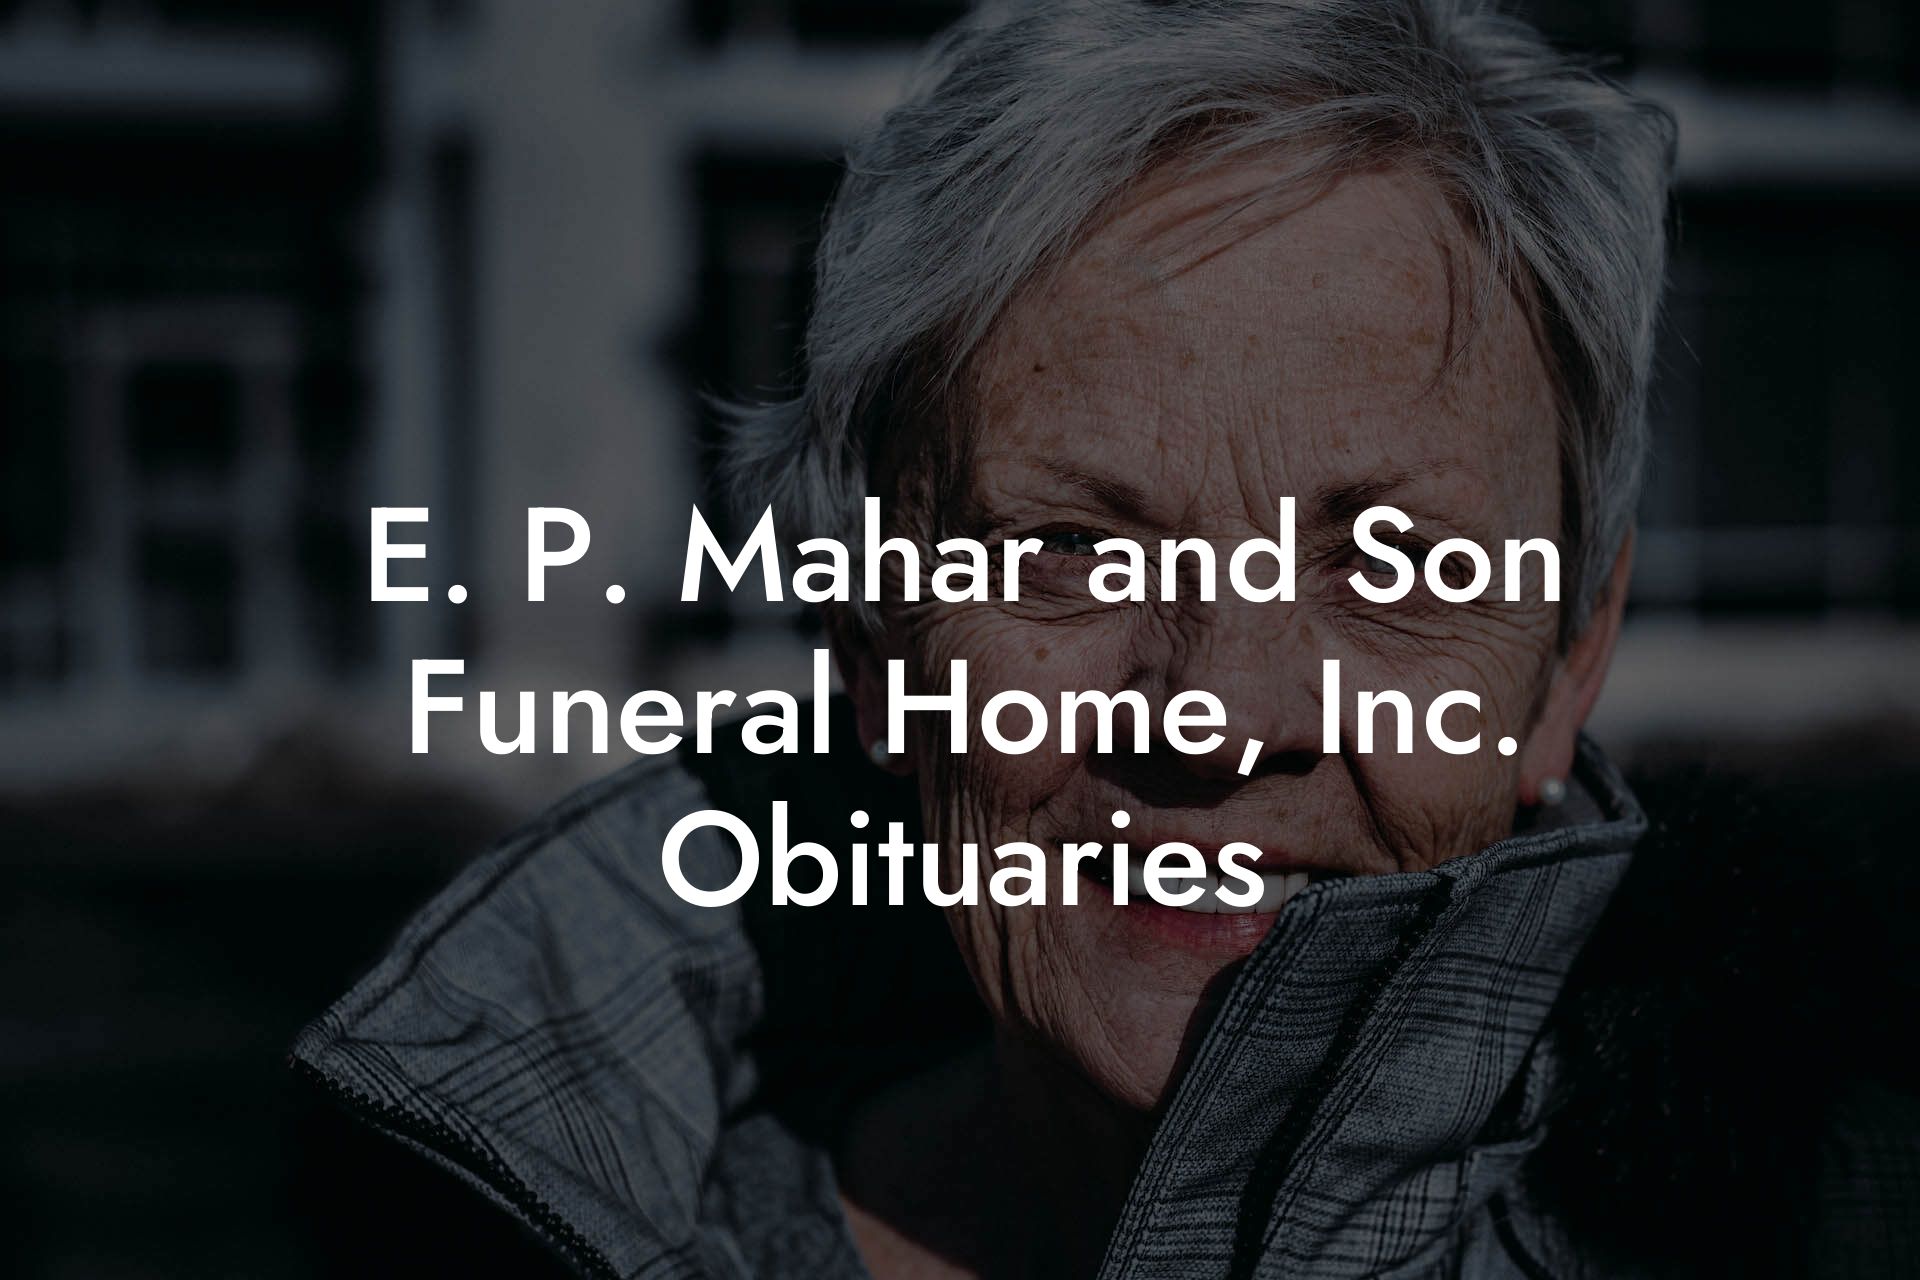 E. P. Mahar and Son Funeral Home, Inc. Obituaries